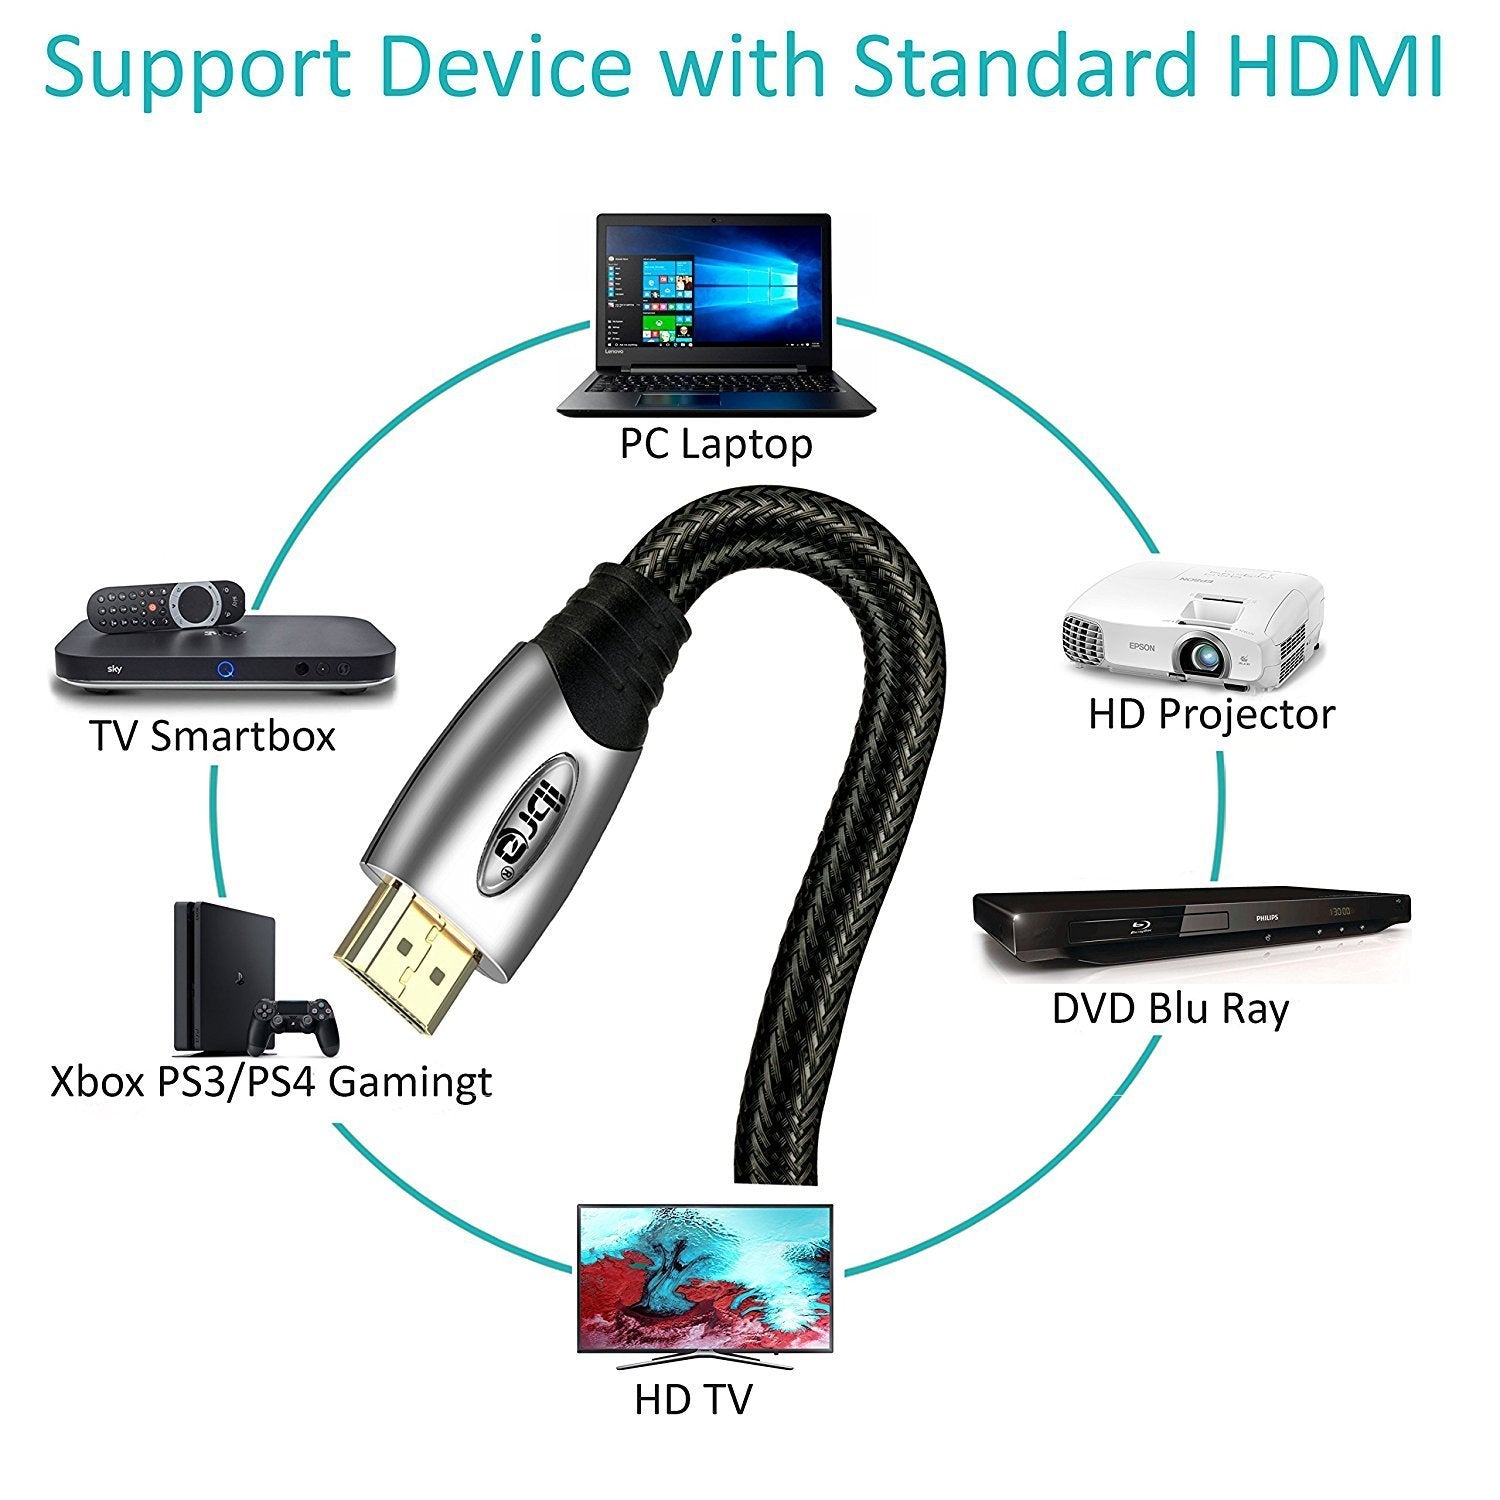 High Speed HDMI Cable v2.0/1.4a 18Gbps 3D TV 2160p PS4 SKY HD 4K@60Hz Ultra HD Ethernet Audio Return Virgin BT Gold Connectors Nylon Braided - 6M - IBRA PLATINUM